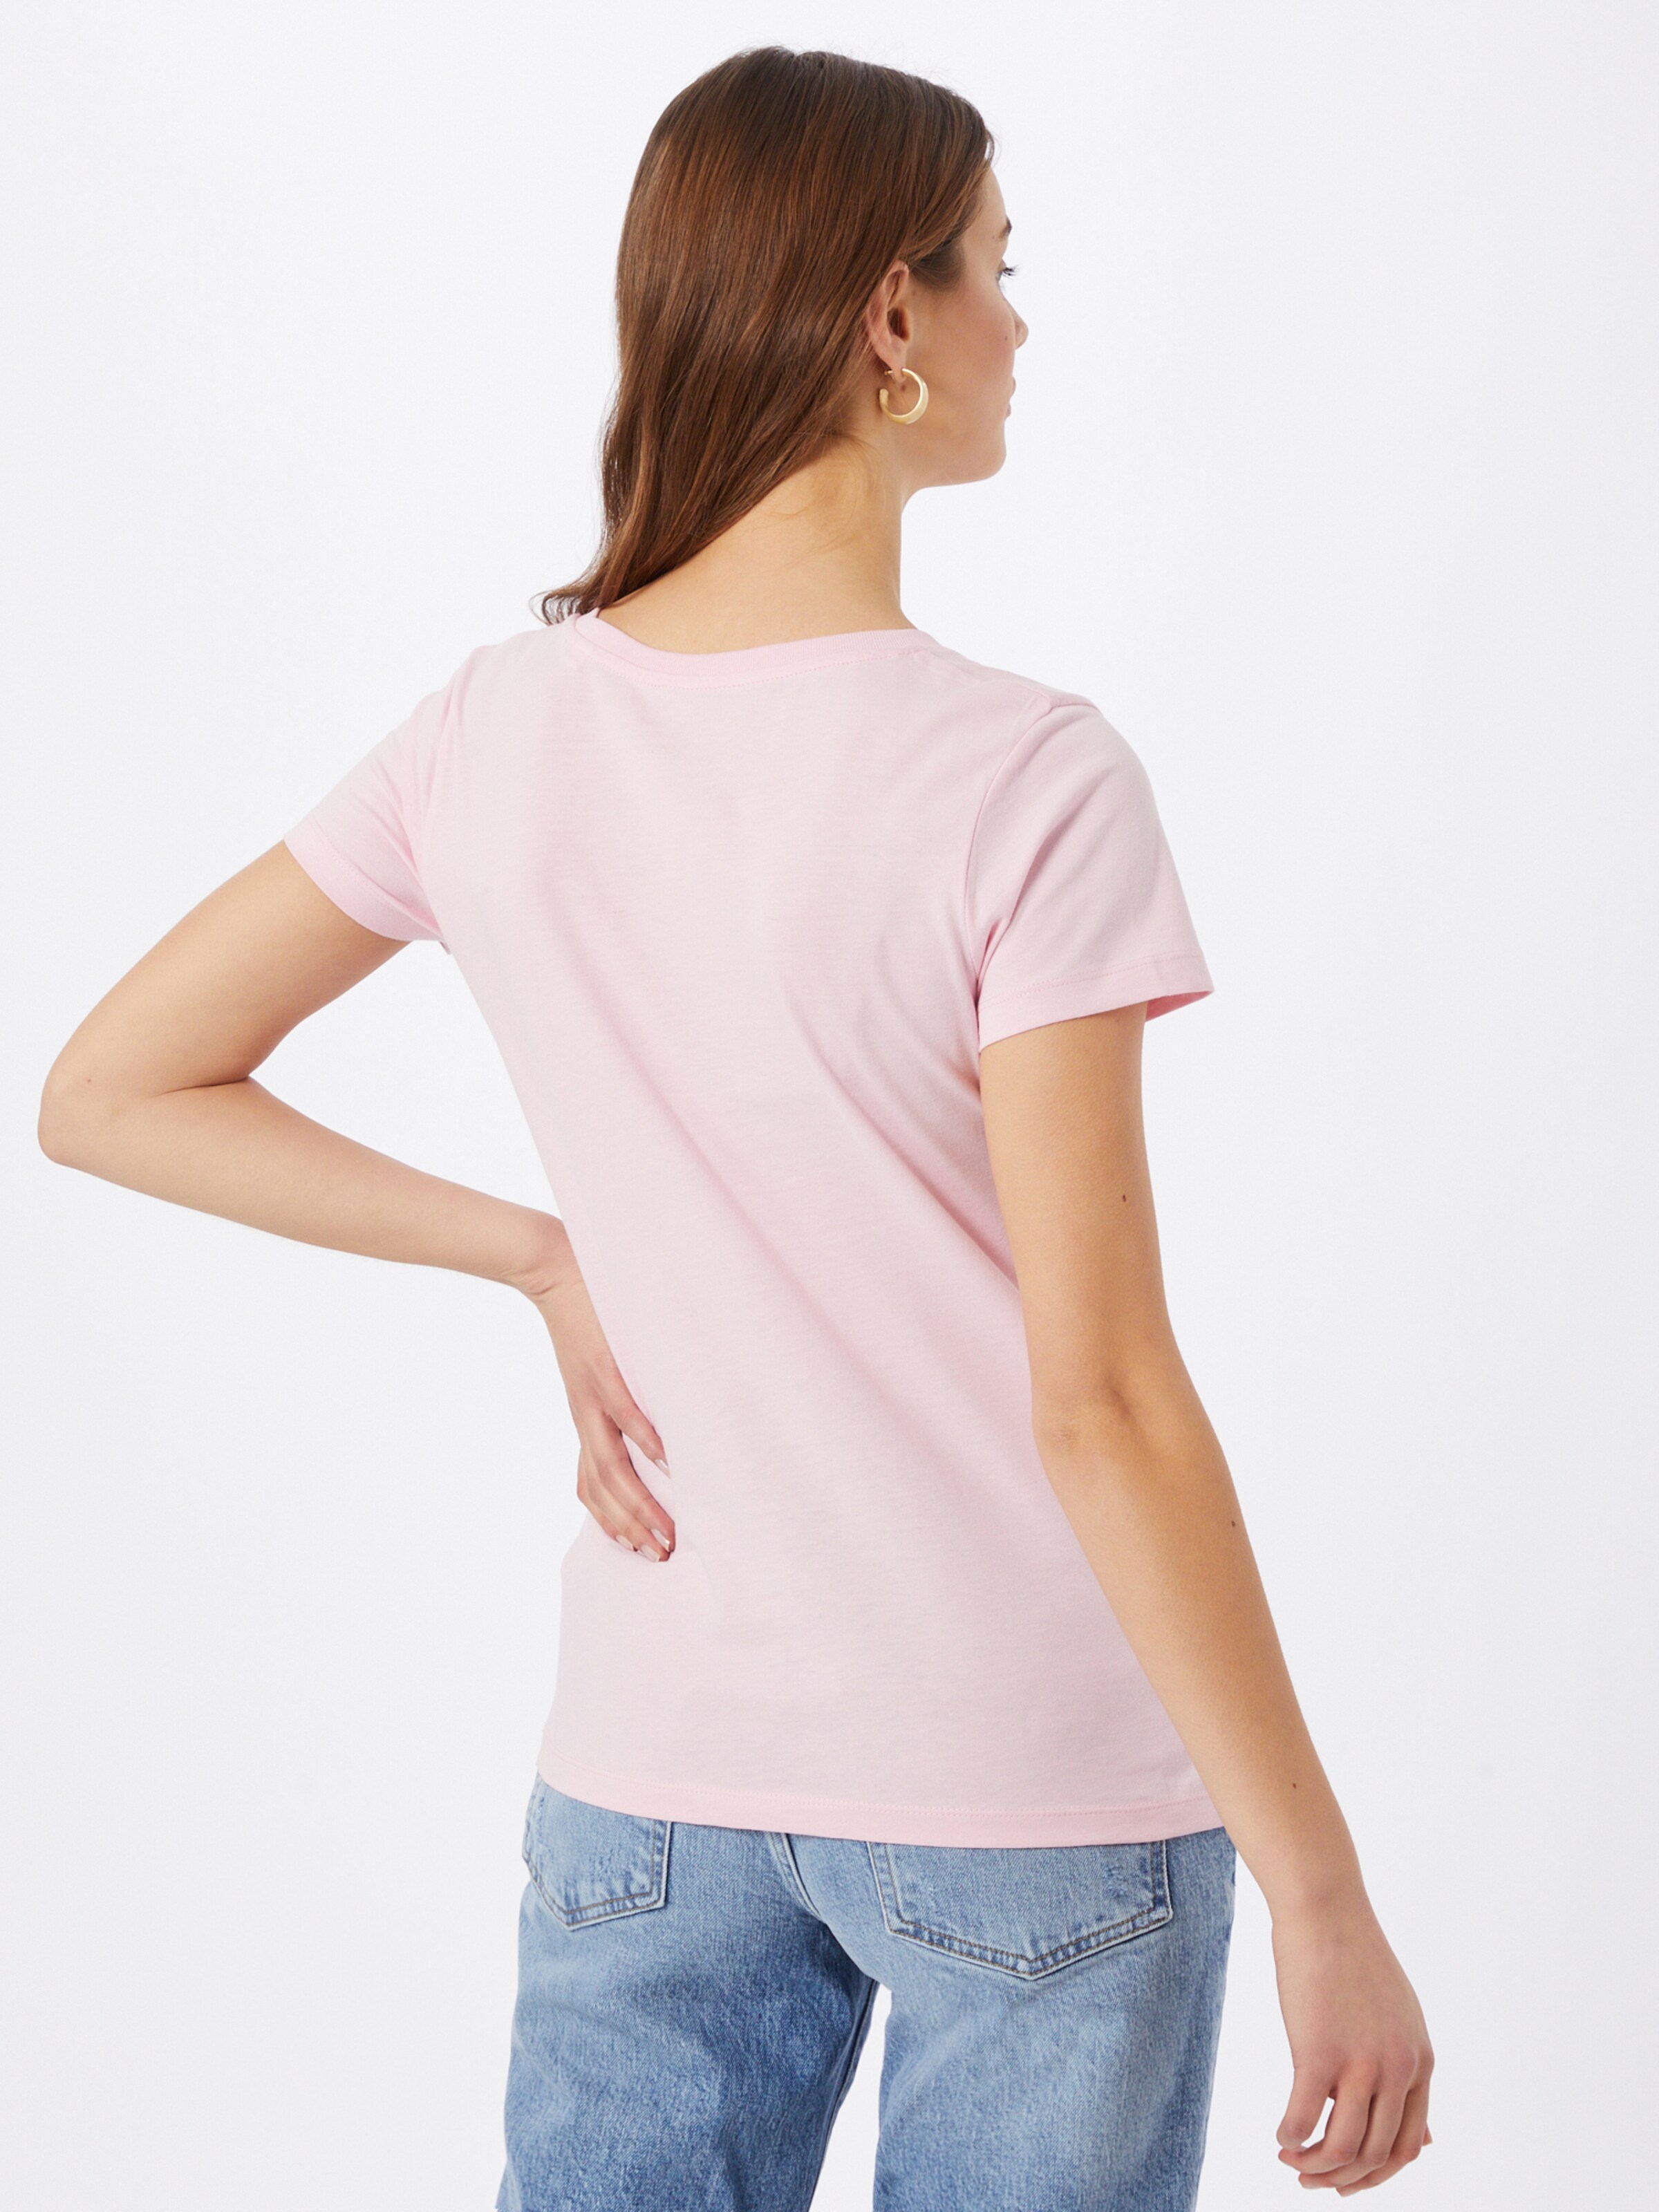 Frauen Shirts & Tops EINSTEIN & NEWTON T-Shirt in Rosa, Pitaya - PS27014